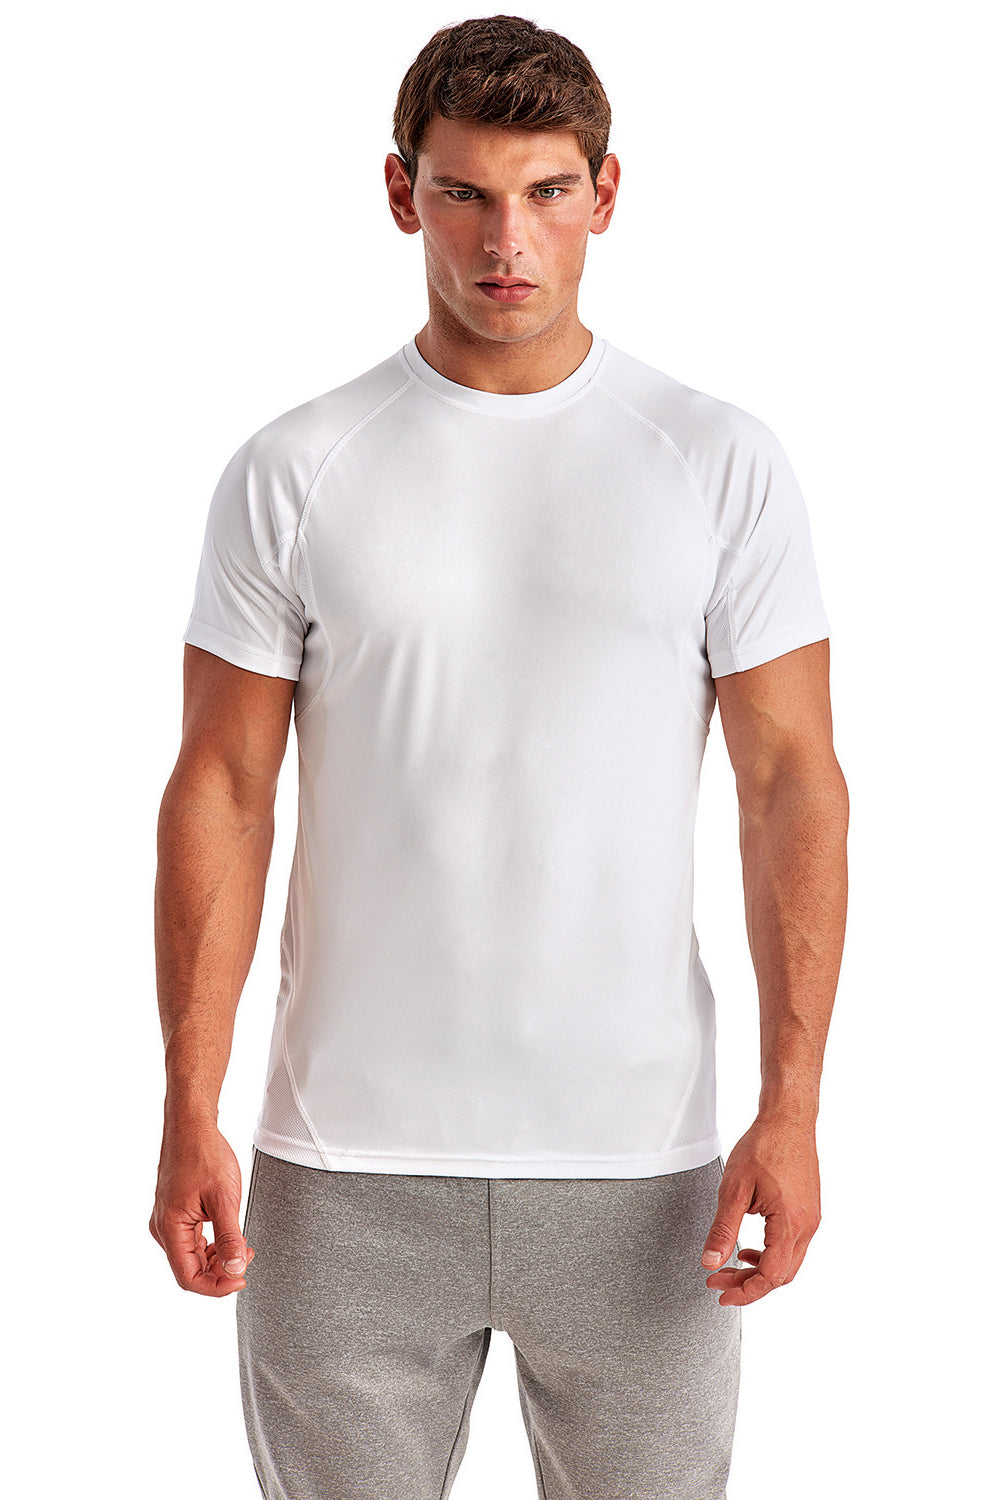 TriDri TD011 Mens Panelled Tech Moisture Wicking Short Sleeve Crewneck T-Shirt White Front